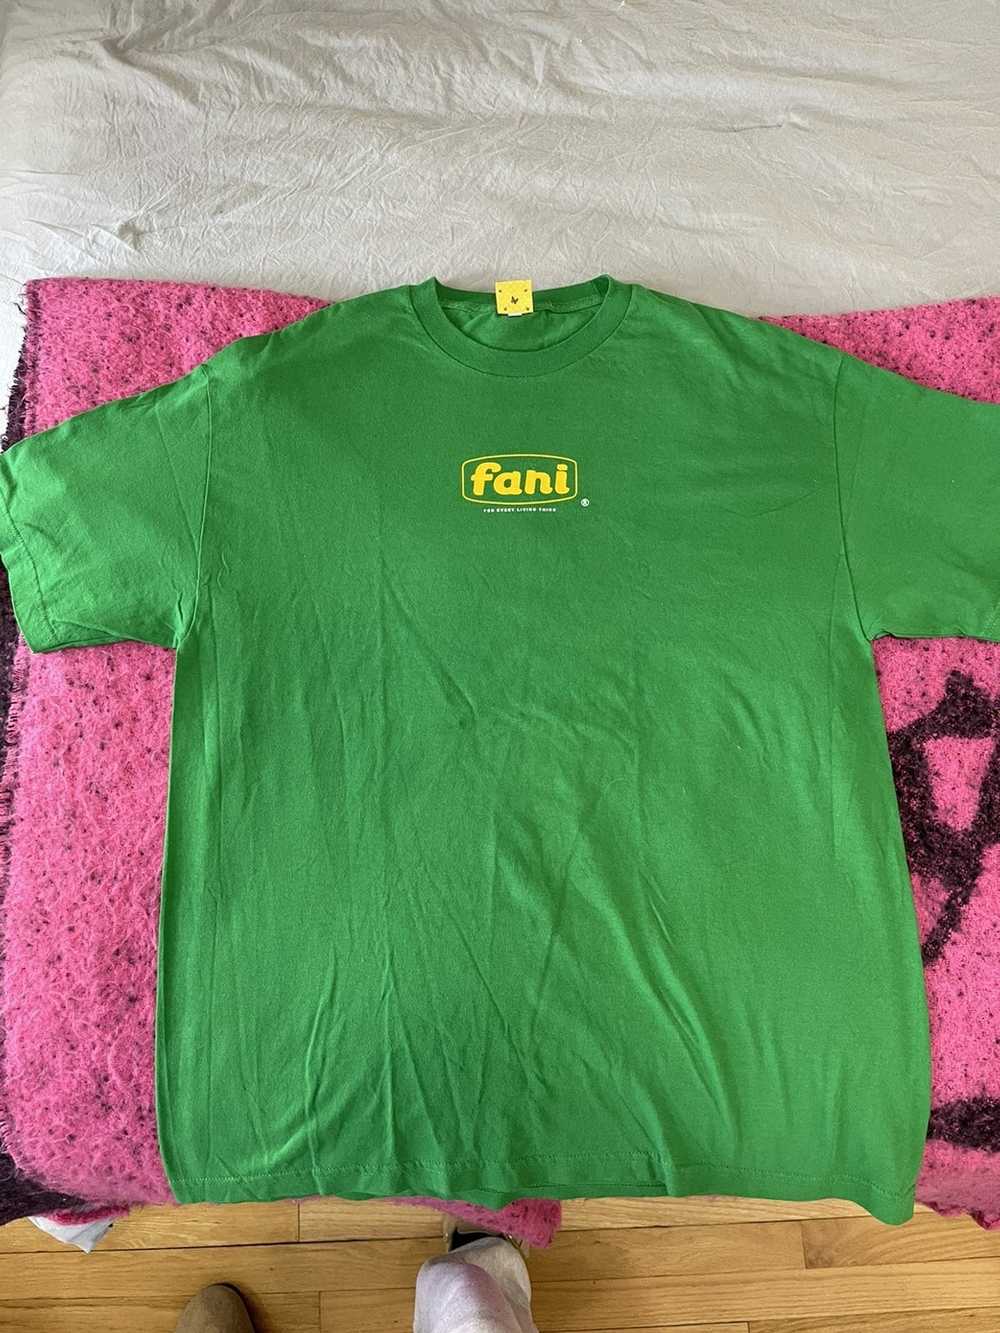 FELT × Streetwear Felt x Fani Tshirt - image 3